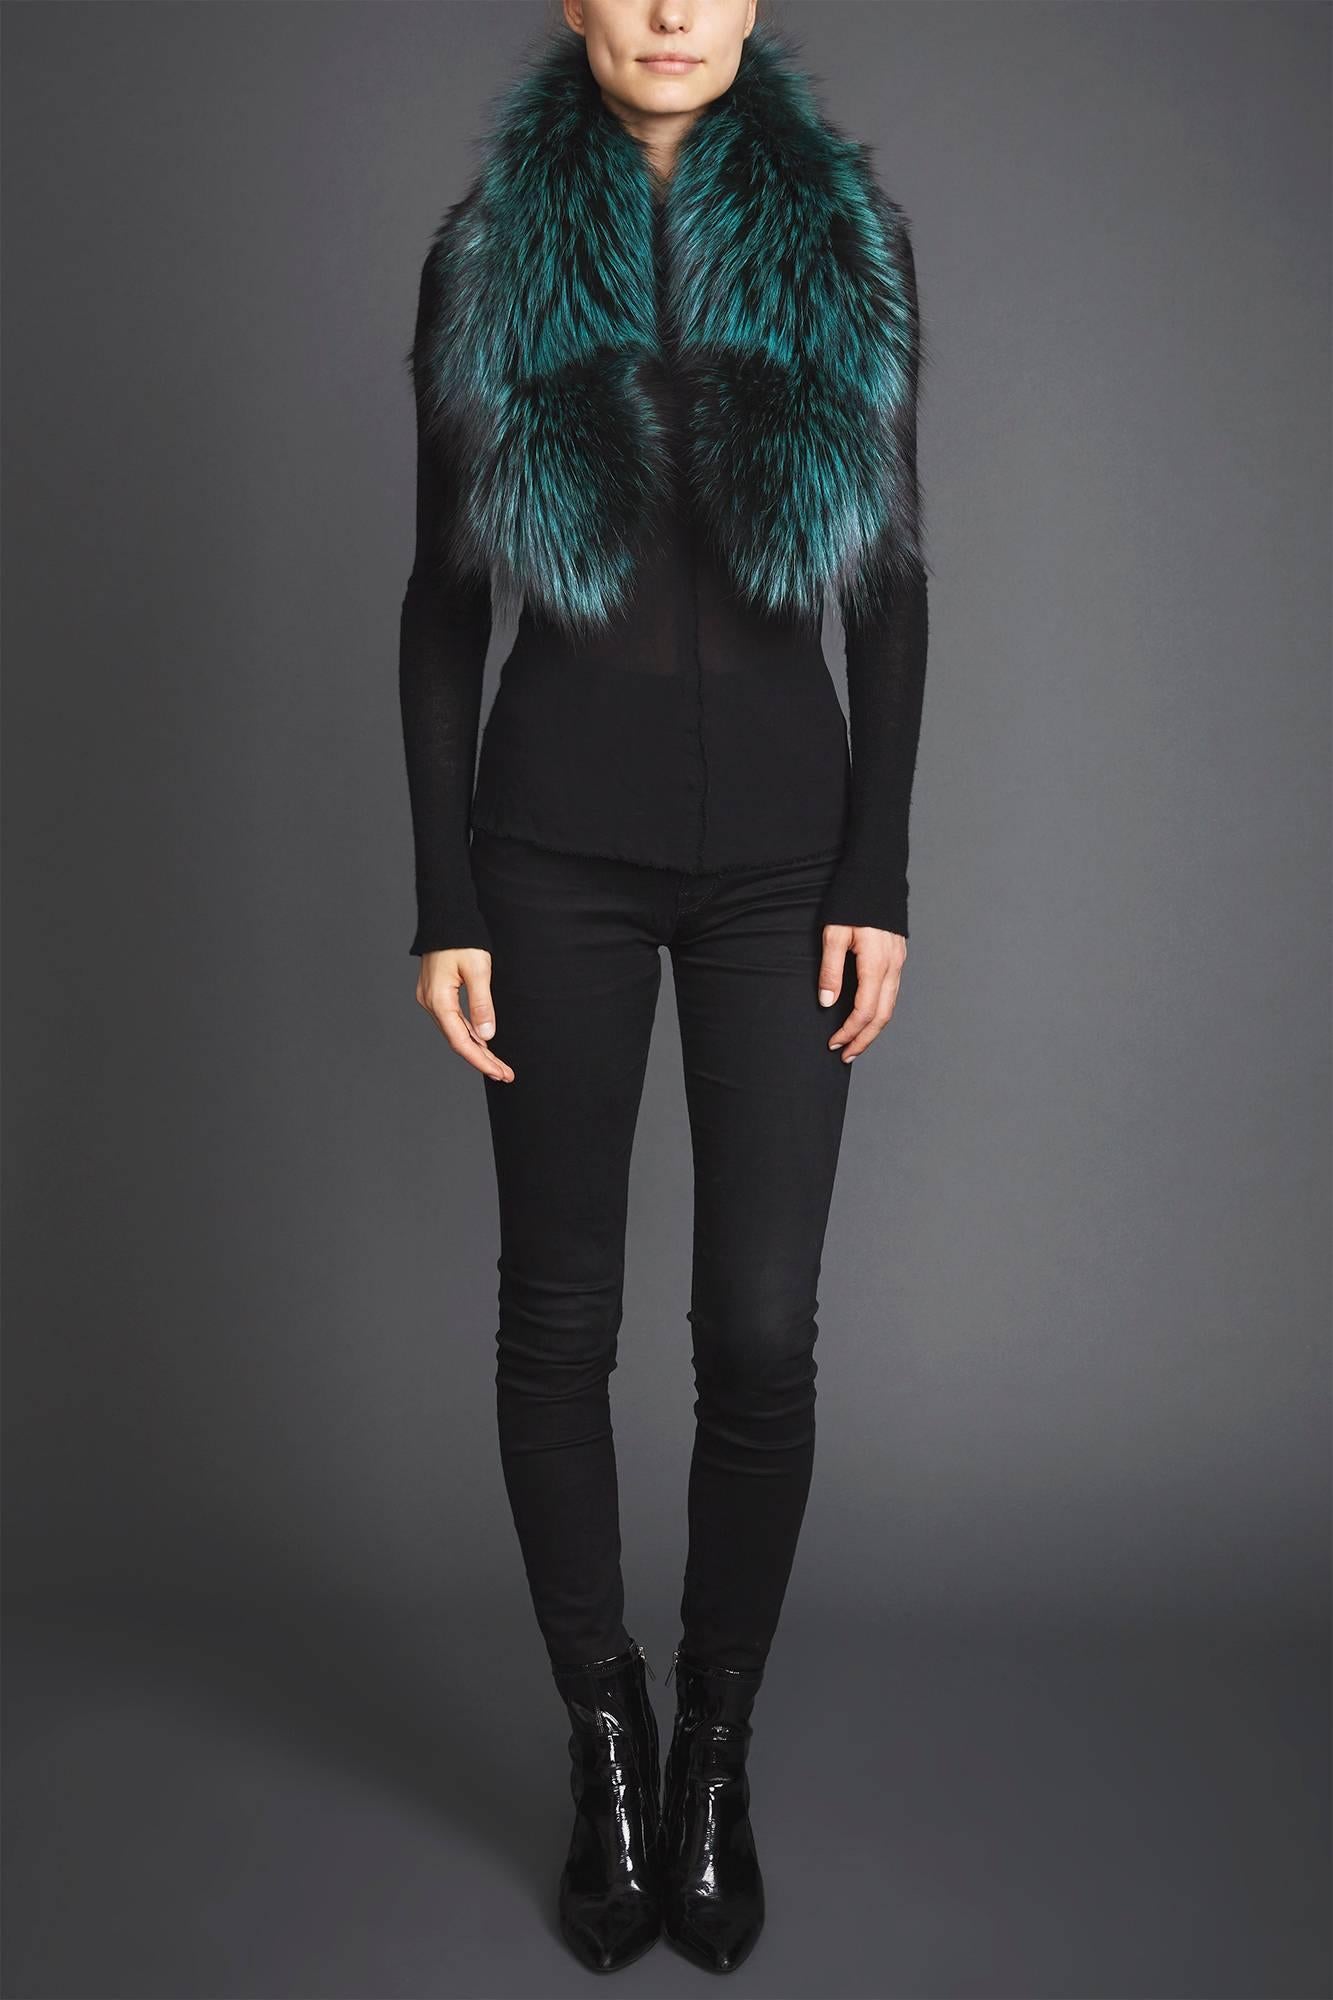 Women's or Men's Verheyen London Lapel Cross-Through Collar in Soft Emerald Fox Fur - Brand New 